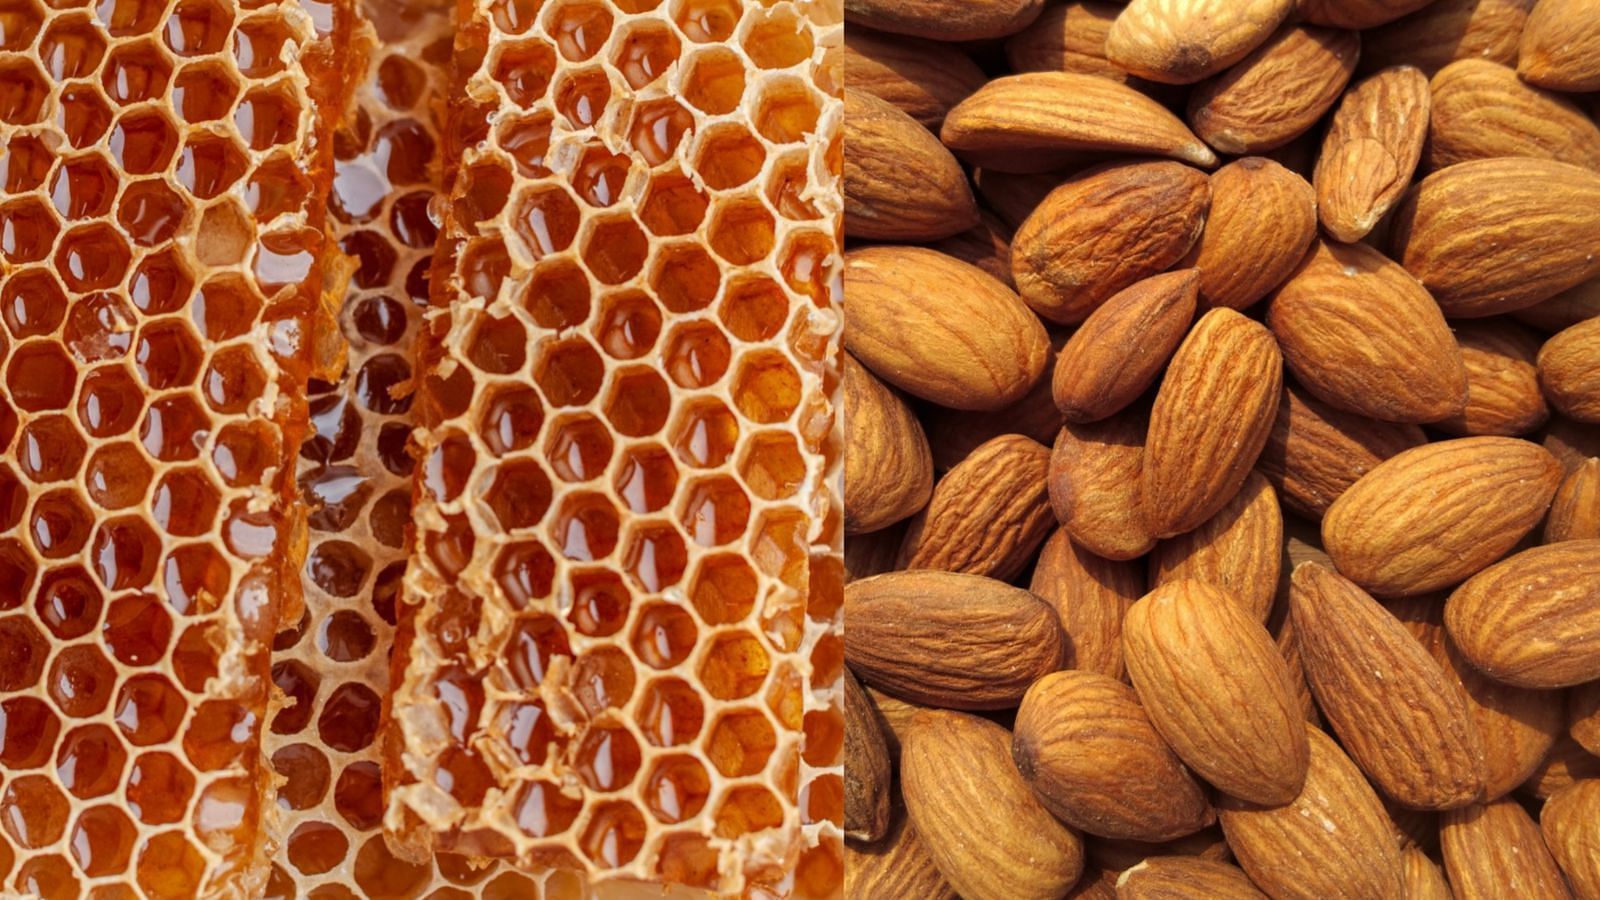 Honey and almond (Image via Pinterest)